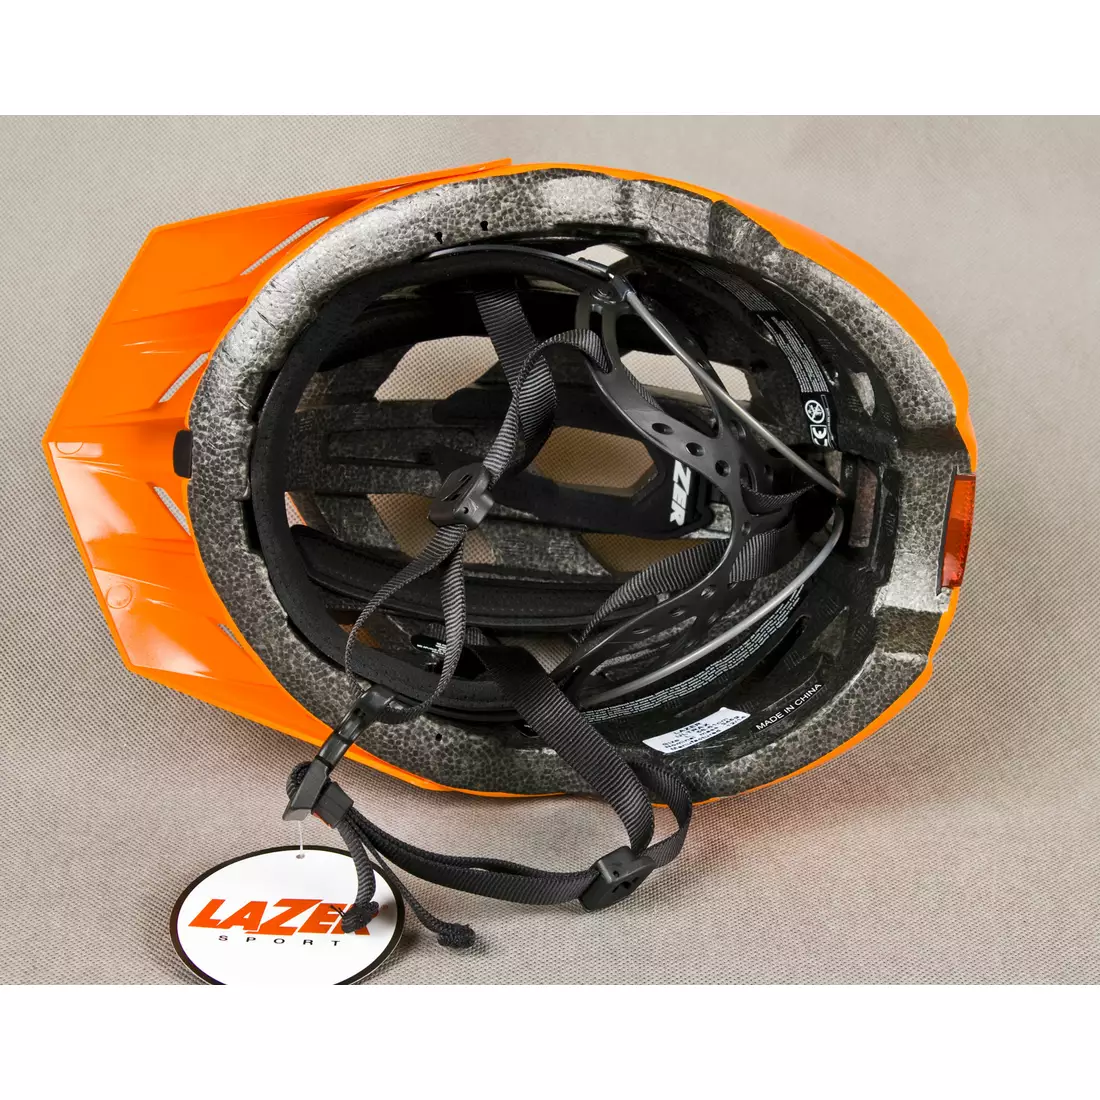 LAZER - ULTRAX MTB bicycle helmet, color: flash orange